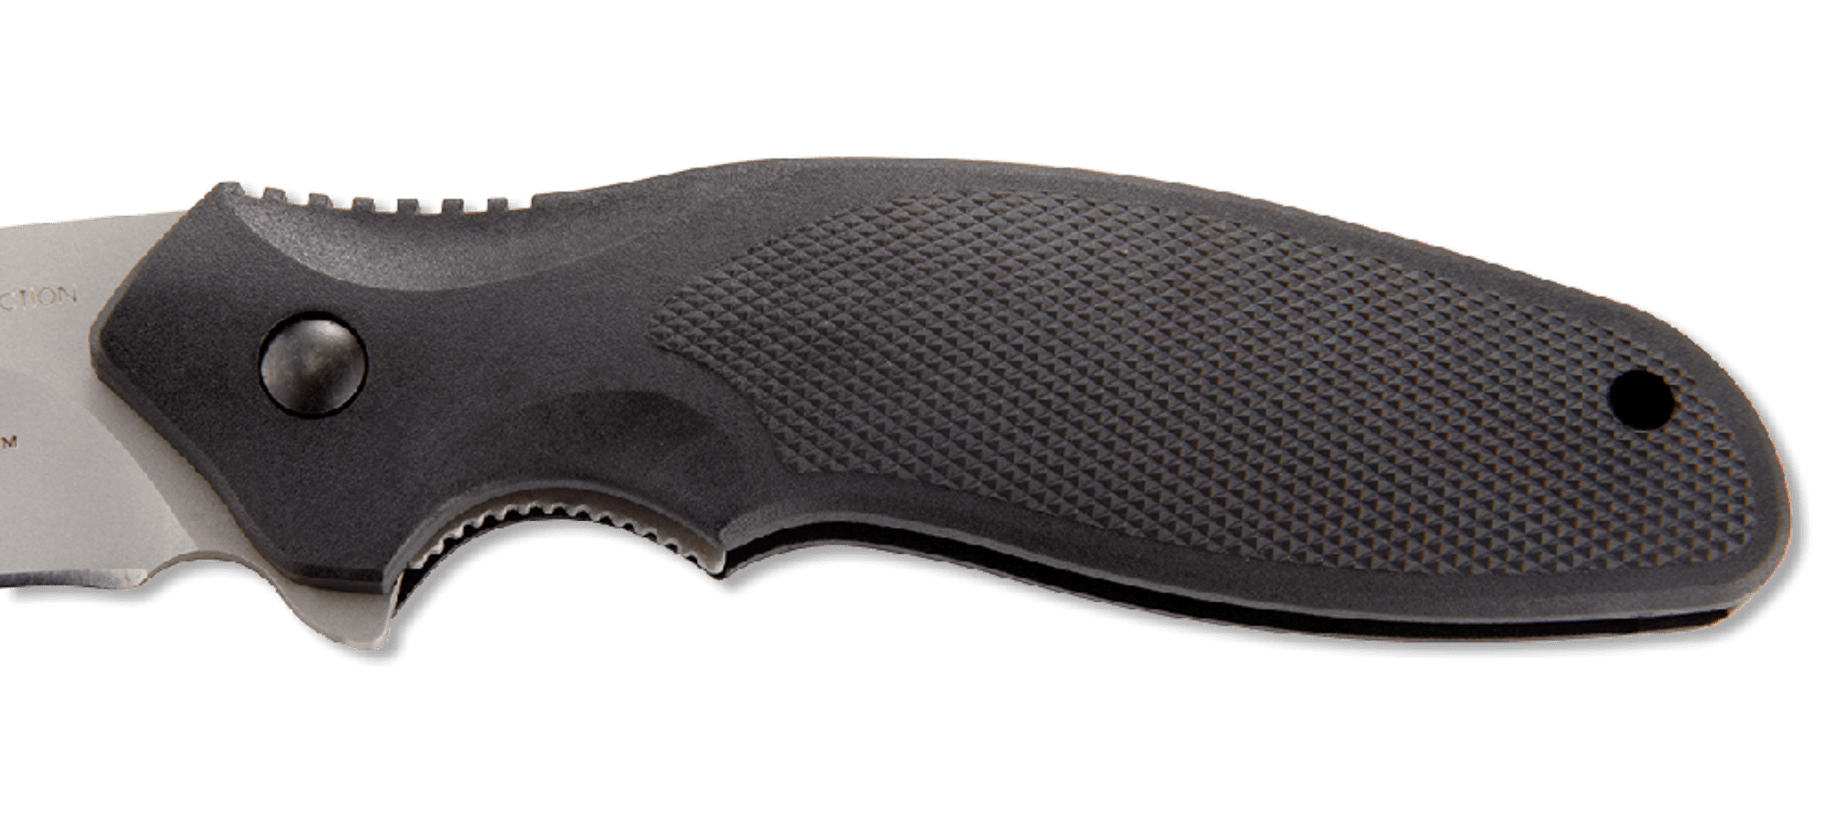 фото Складной нож crkt shenanigan™ z, сталь aus-8, рукоять термопластик grn